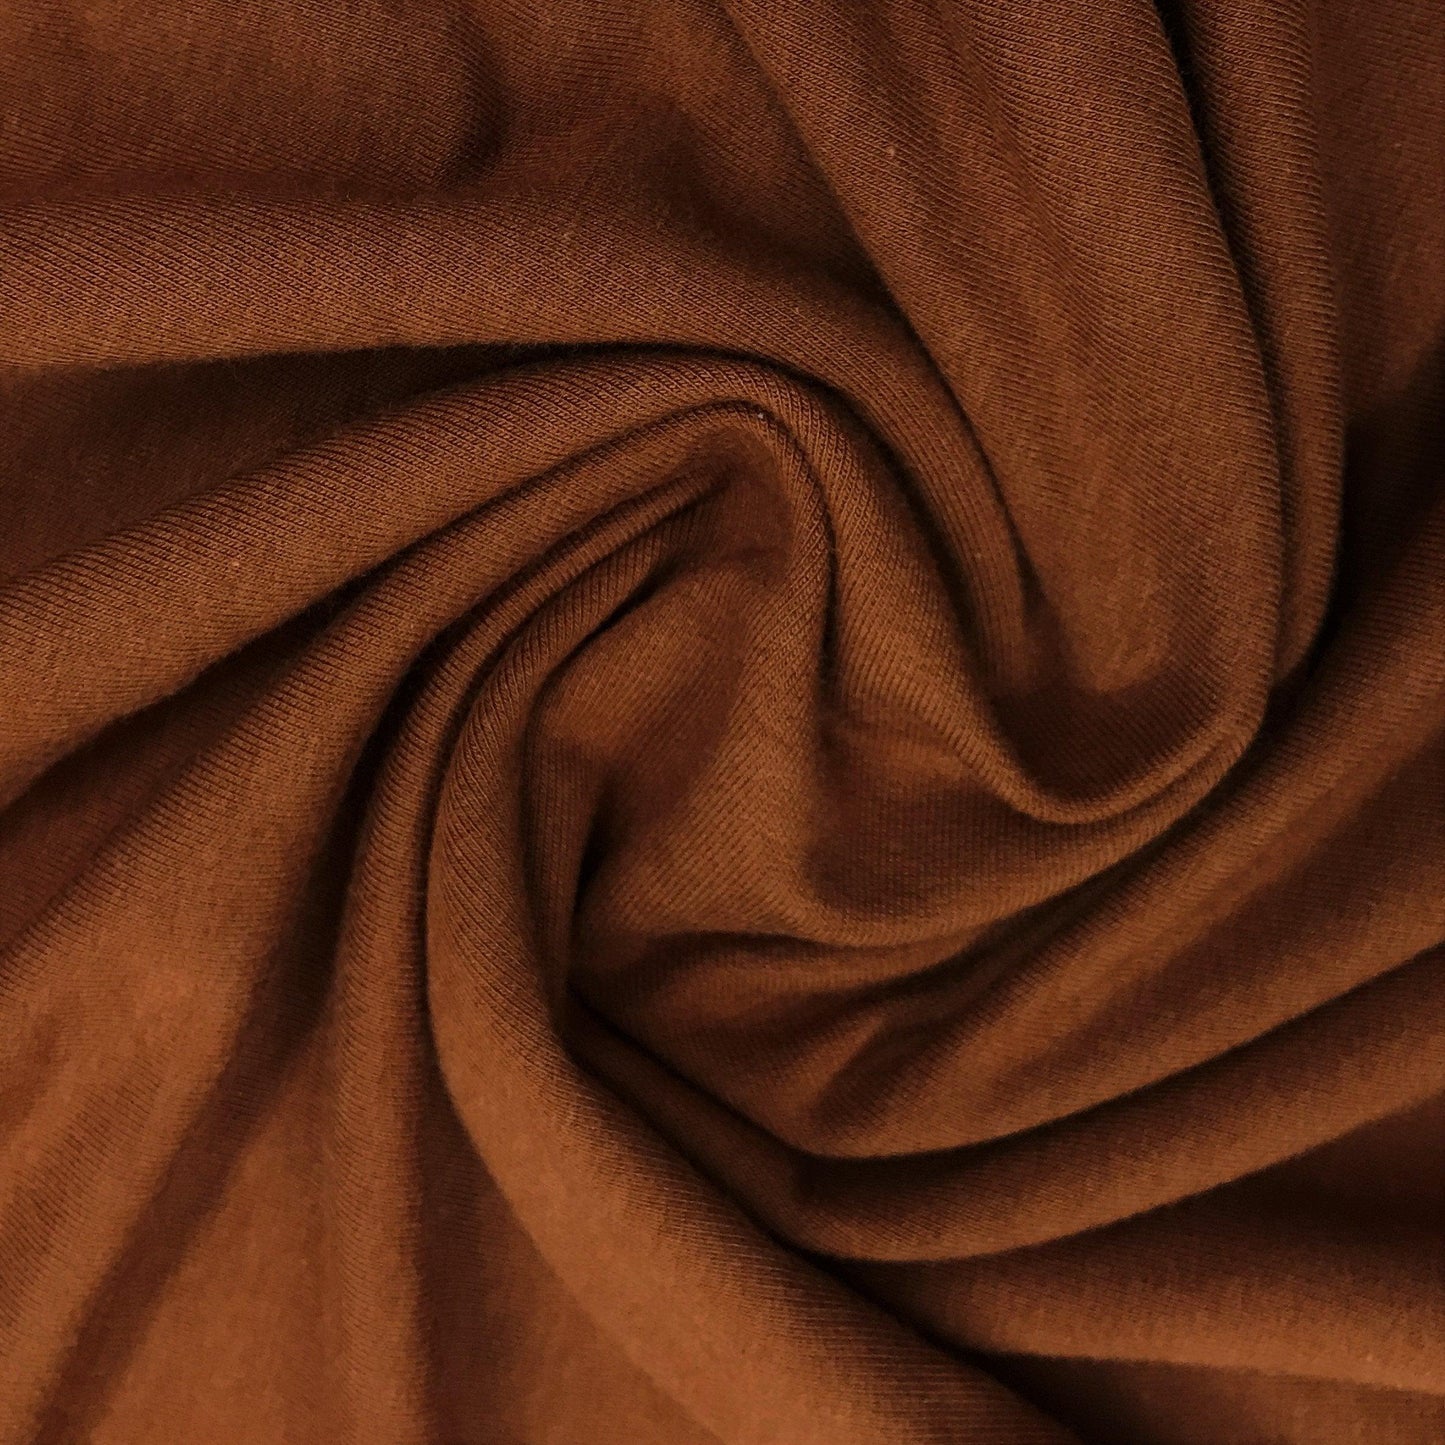 Spice Bamboo/Spandex Jersey Fabric - 240 GSM, $9.35/yd - Rolls - Nature's Fabrics